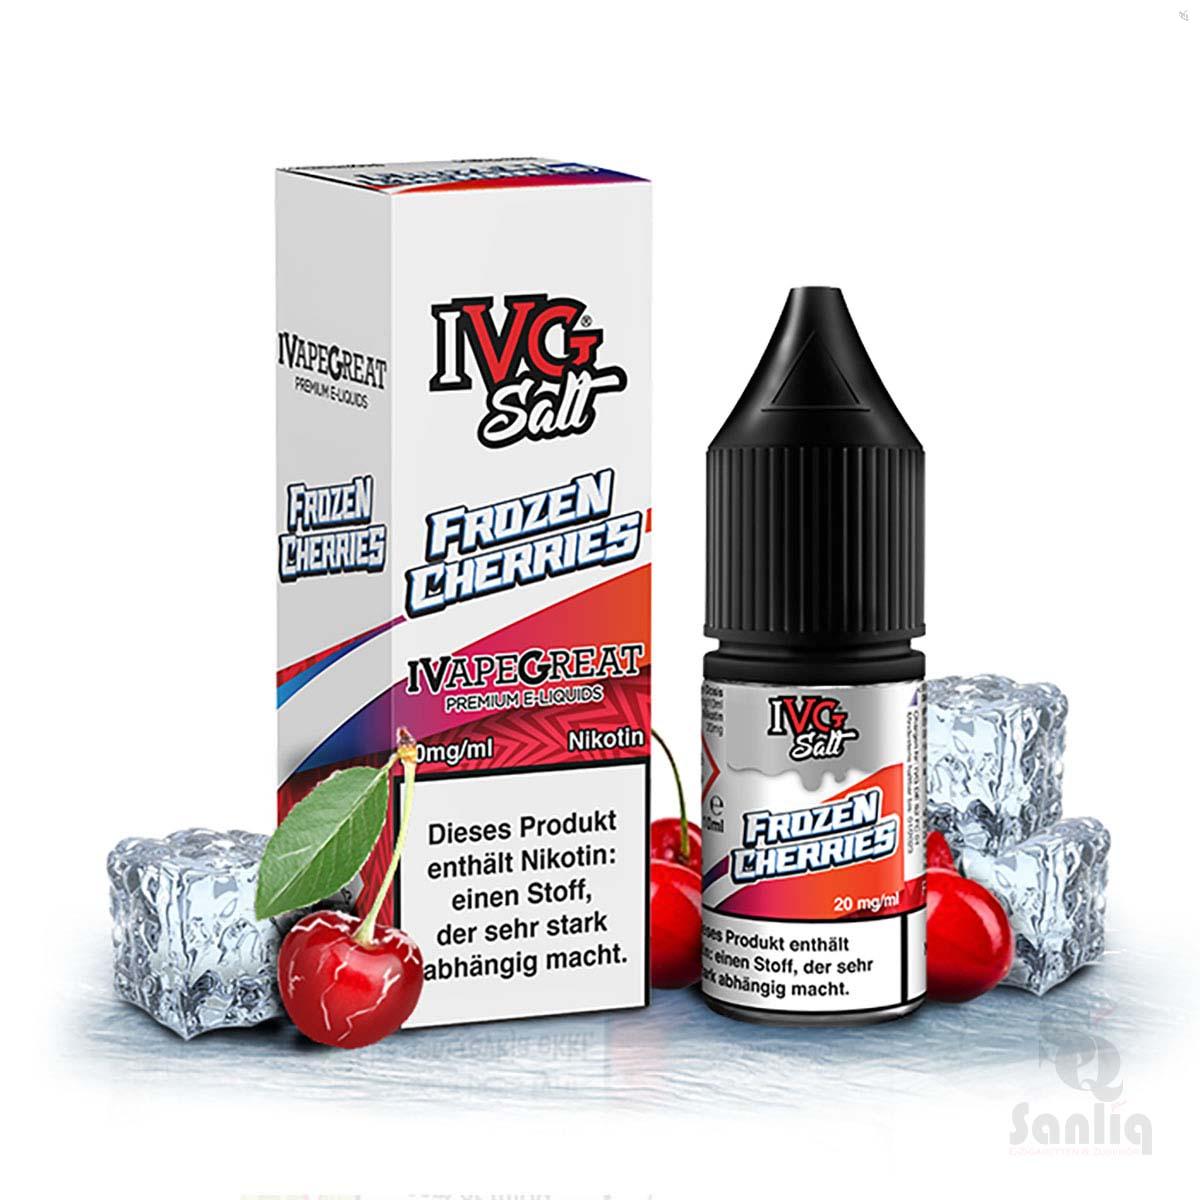 IVG CHRUSHED Froozen Cherries Nikotinsalz Liquid ➡️ Günstig kaufen! 